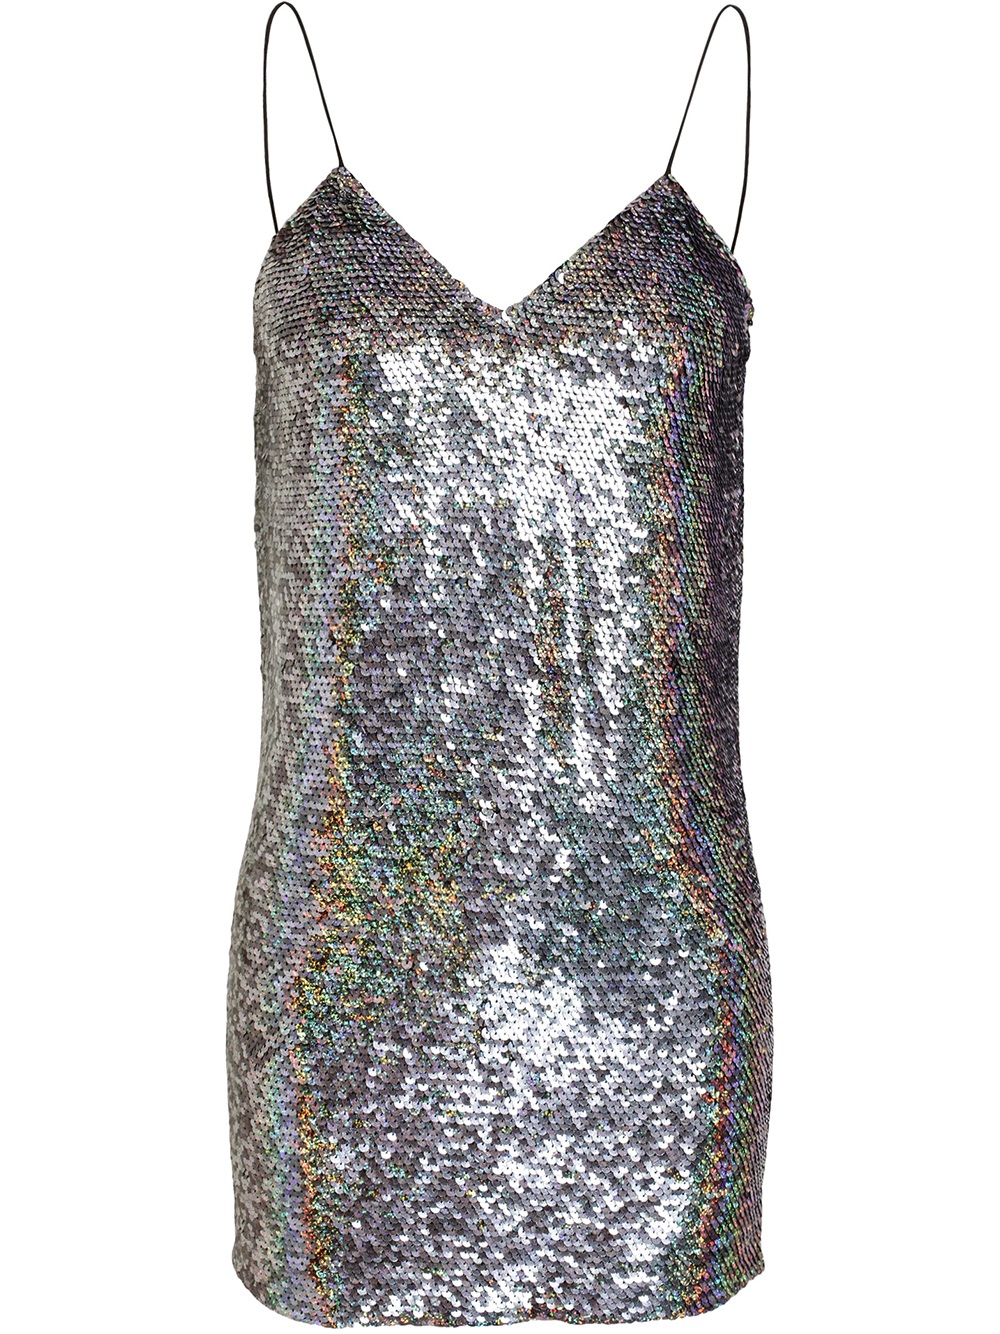 Lyst - Ashish Holographic Sequin Slip Dress in Metallic